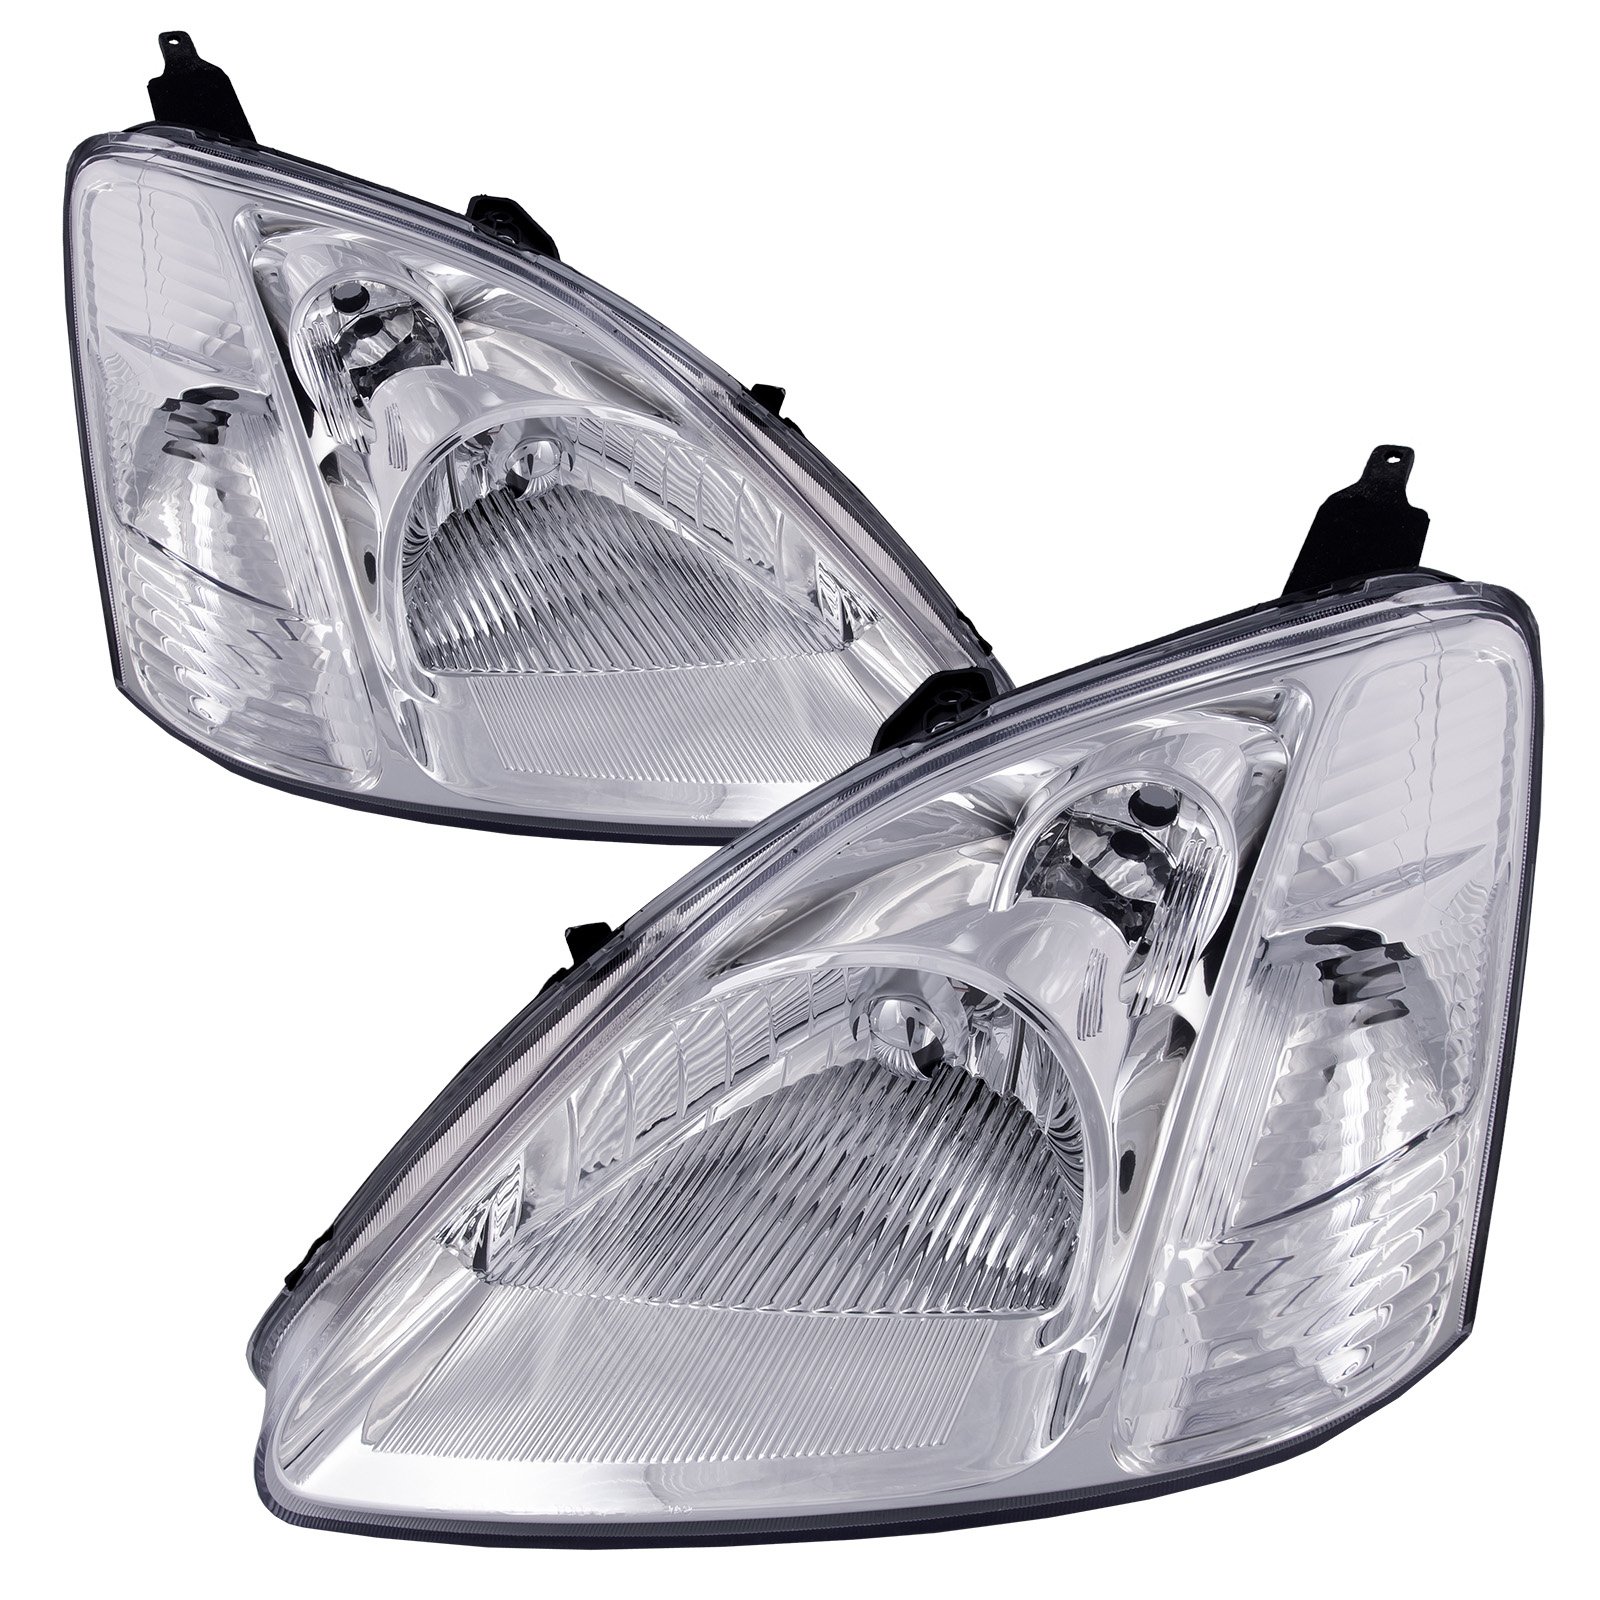 New Pair Set Headlight Headlamp Lens Housing Assembly for 02-03 Honda Civic 